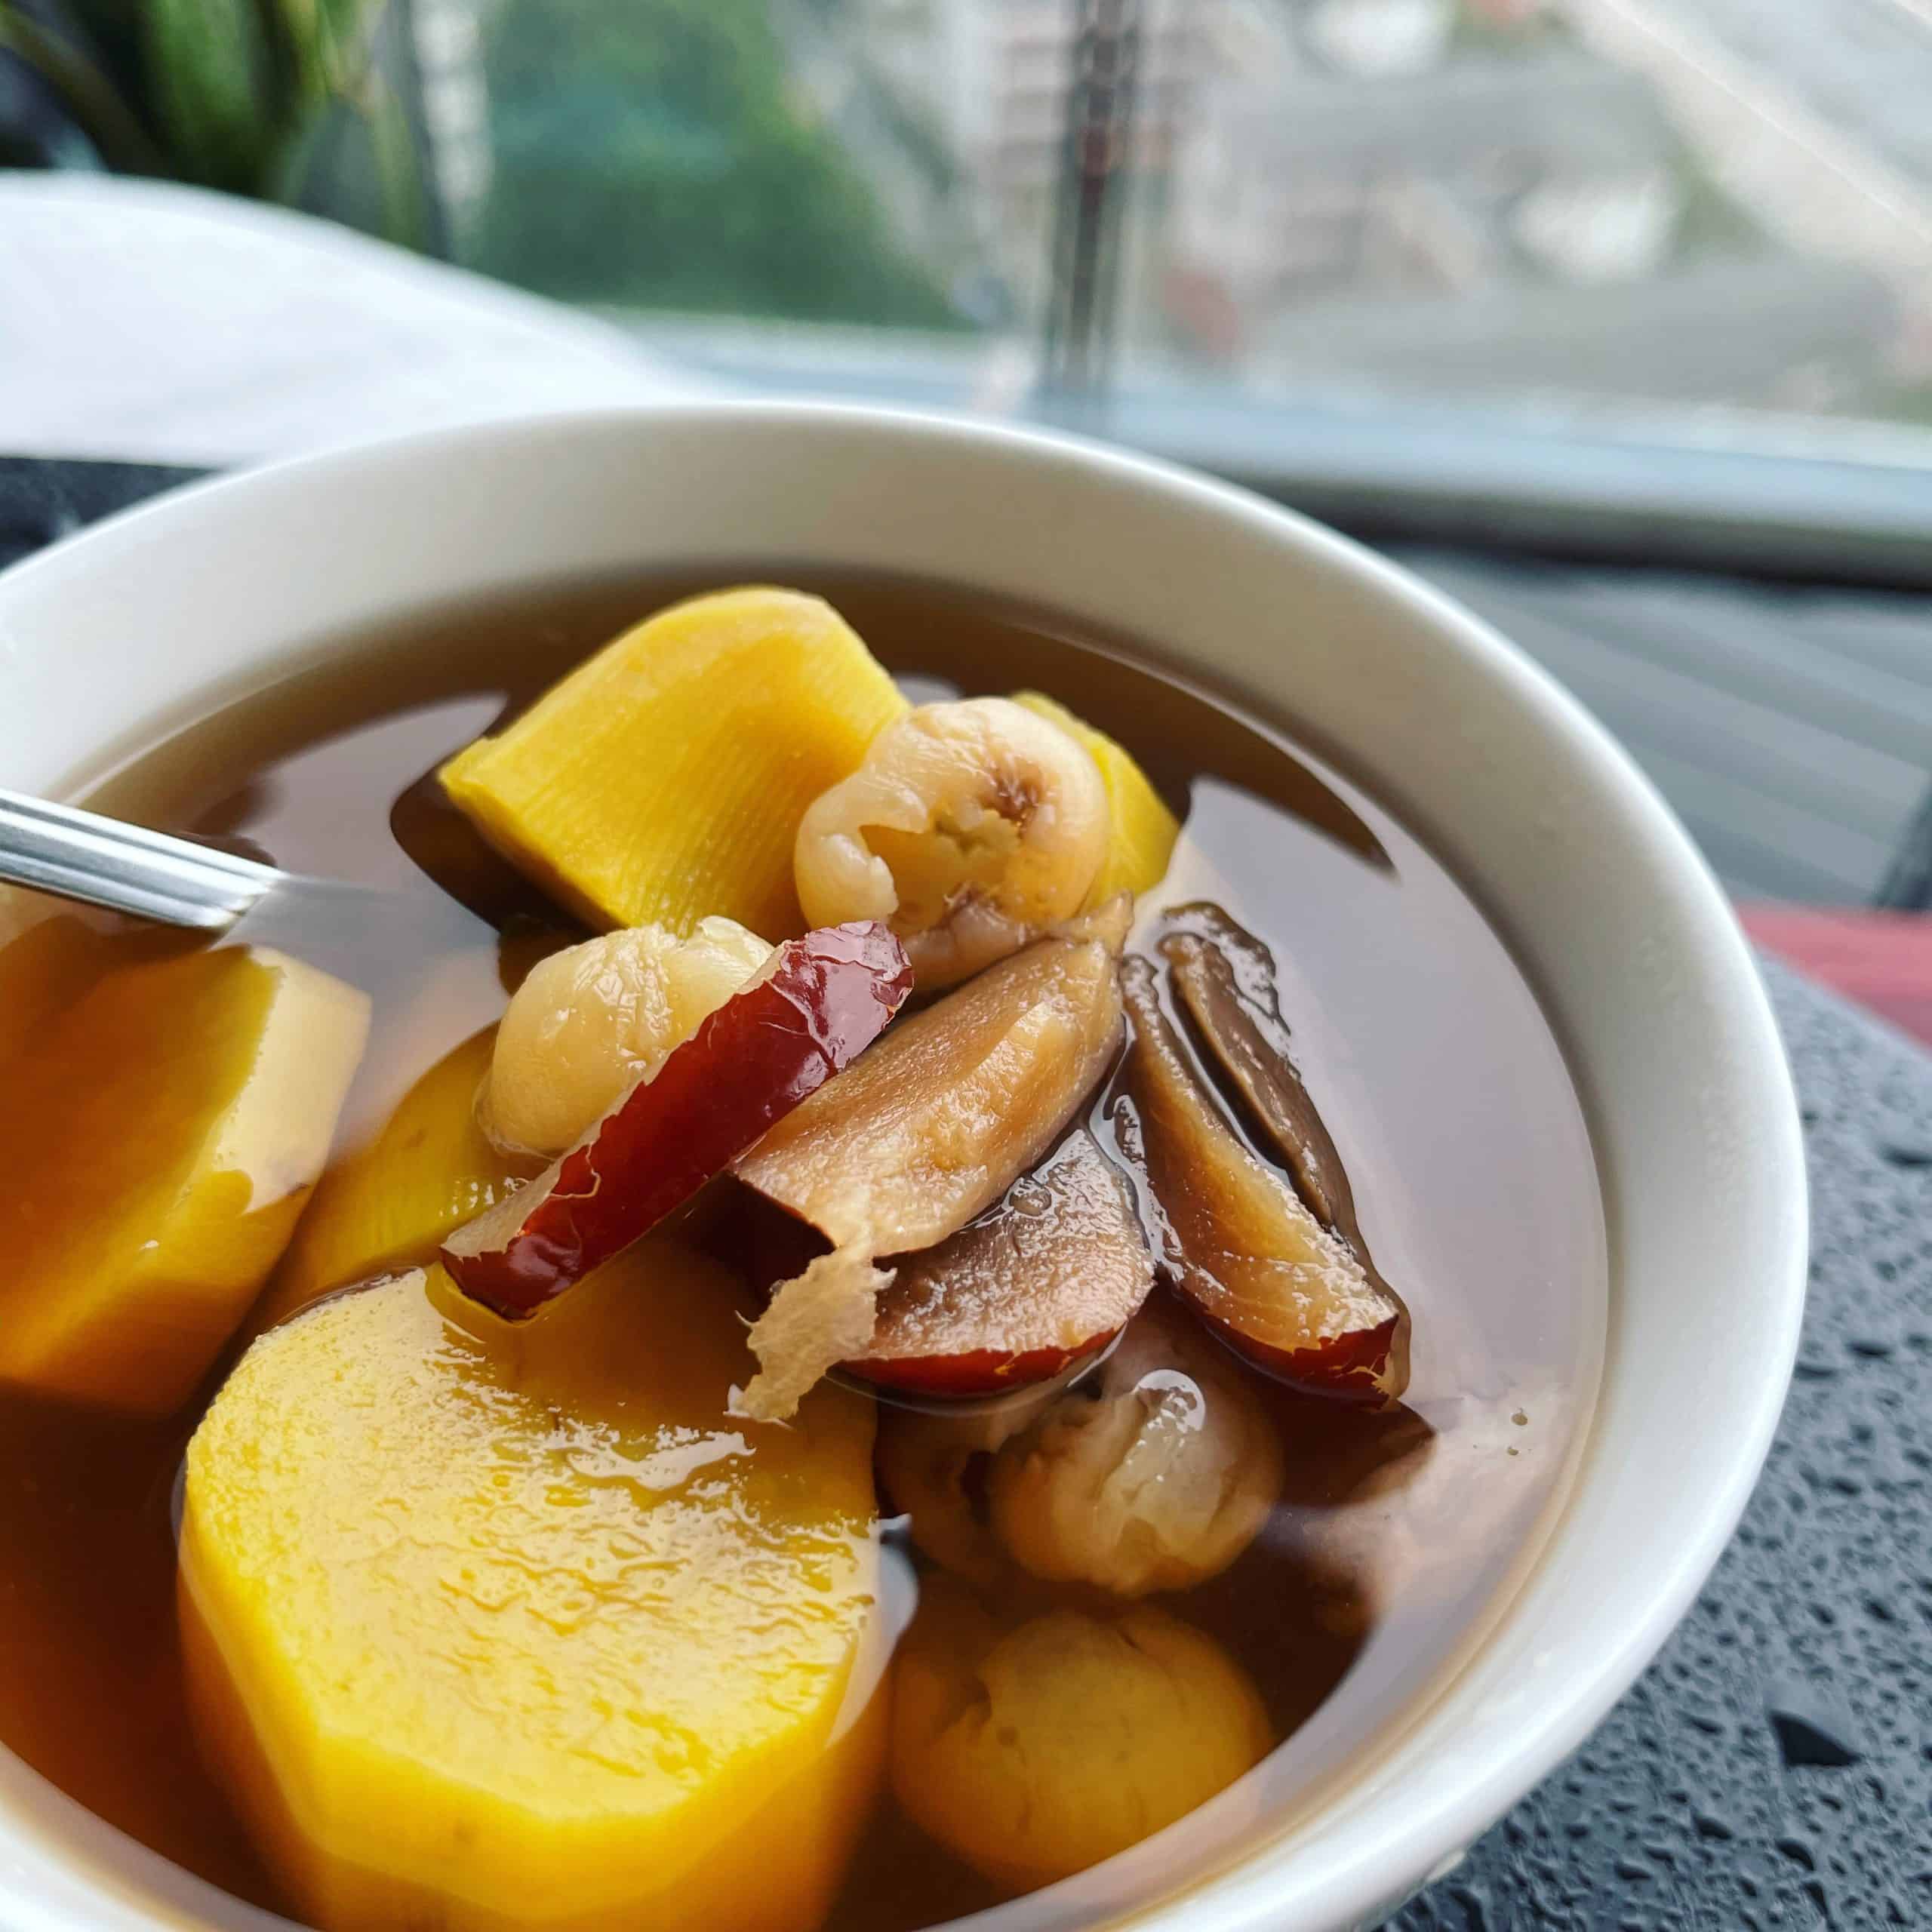 My Wok Life Cooking Blog - Honey Sweet Potato & Ginger Soup (地瓜甜姜汤) : Steaming Hot Soup for Rainy Day - Honey Sweet Potato & Ginger Soup